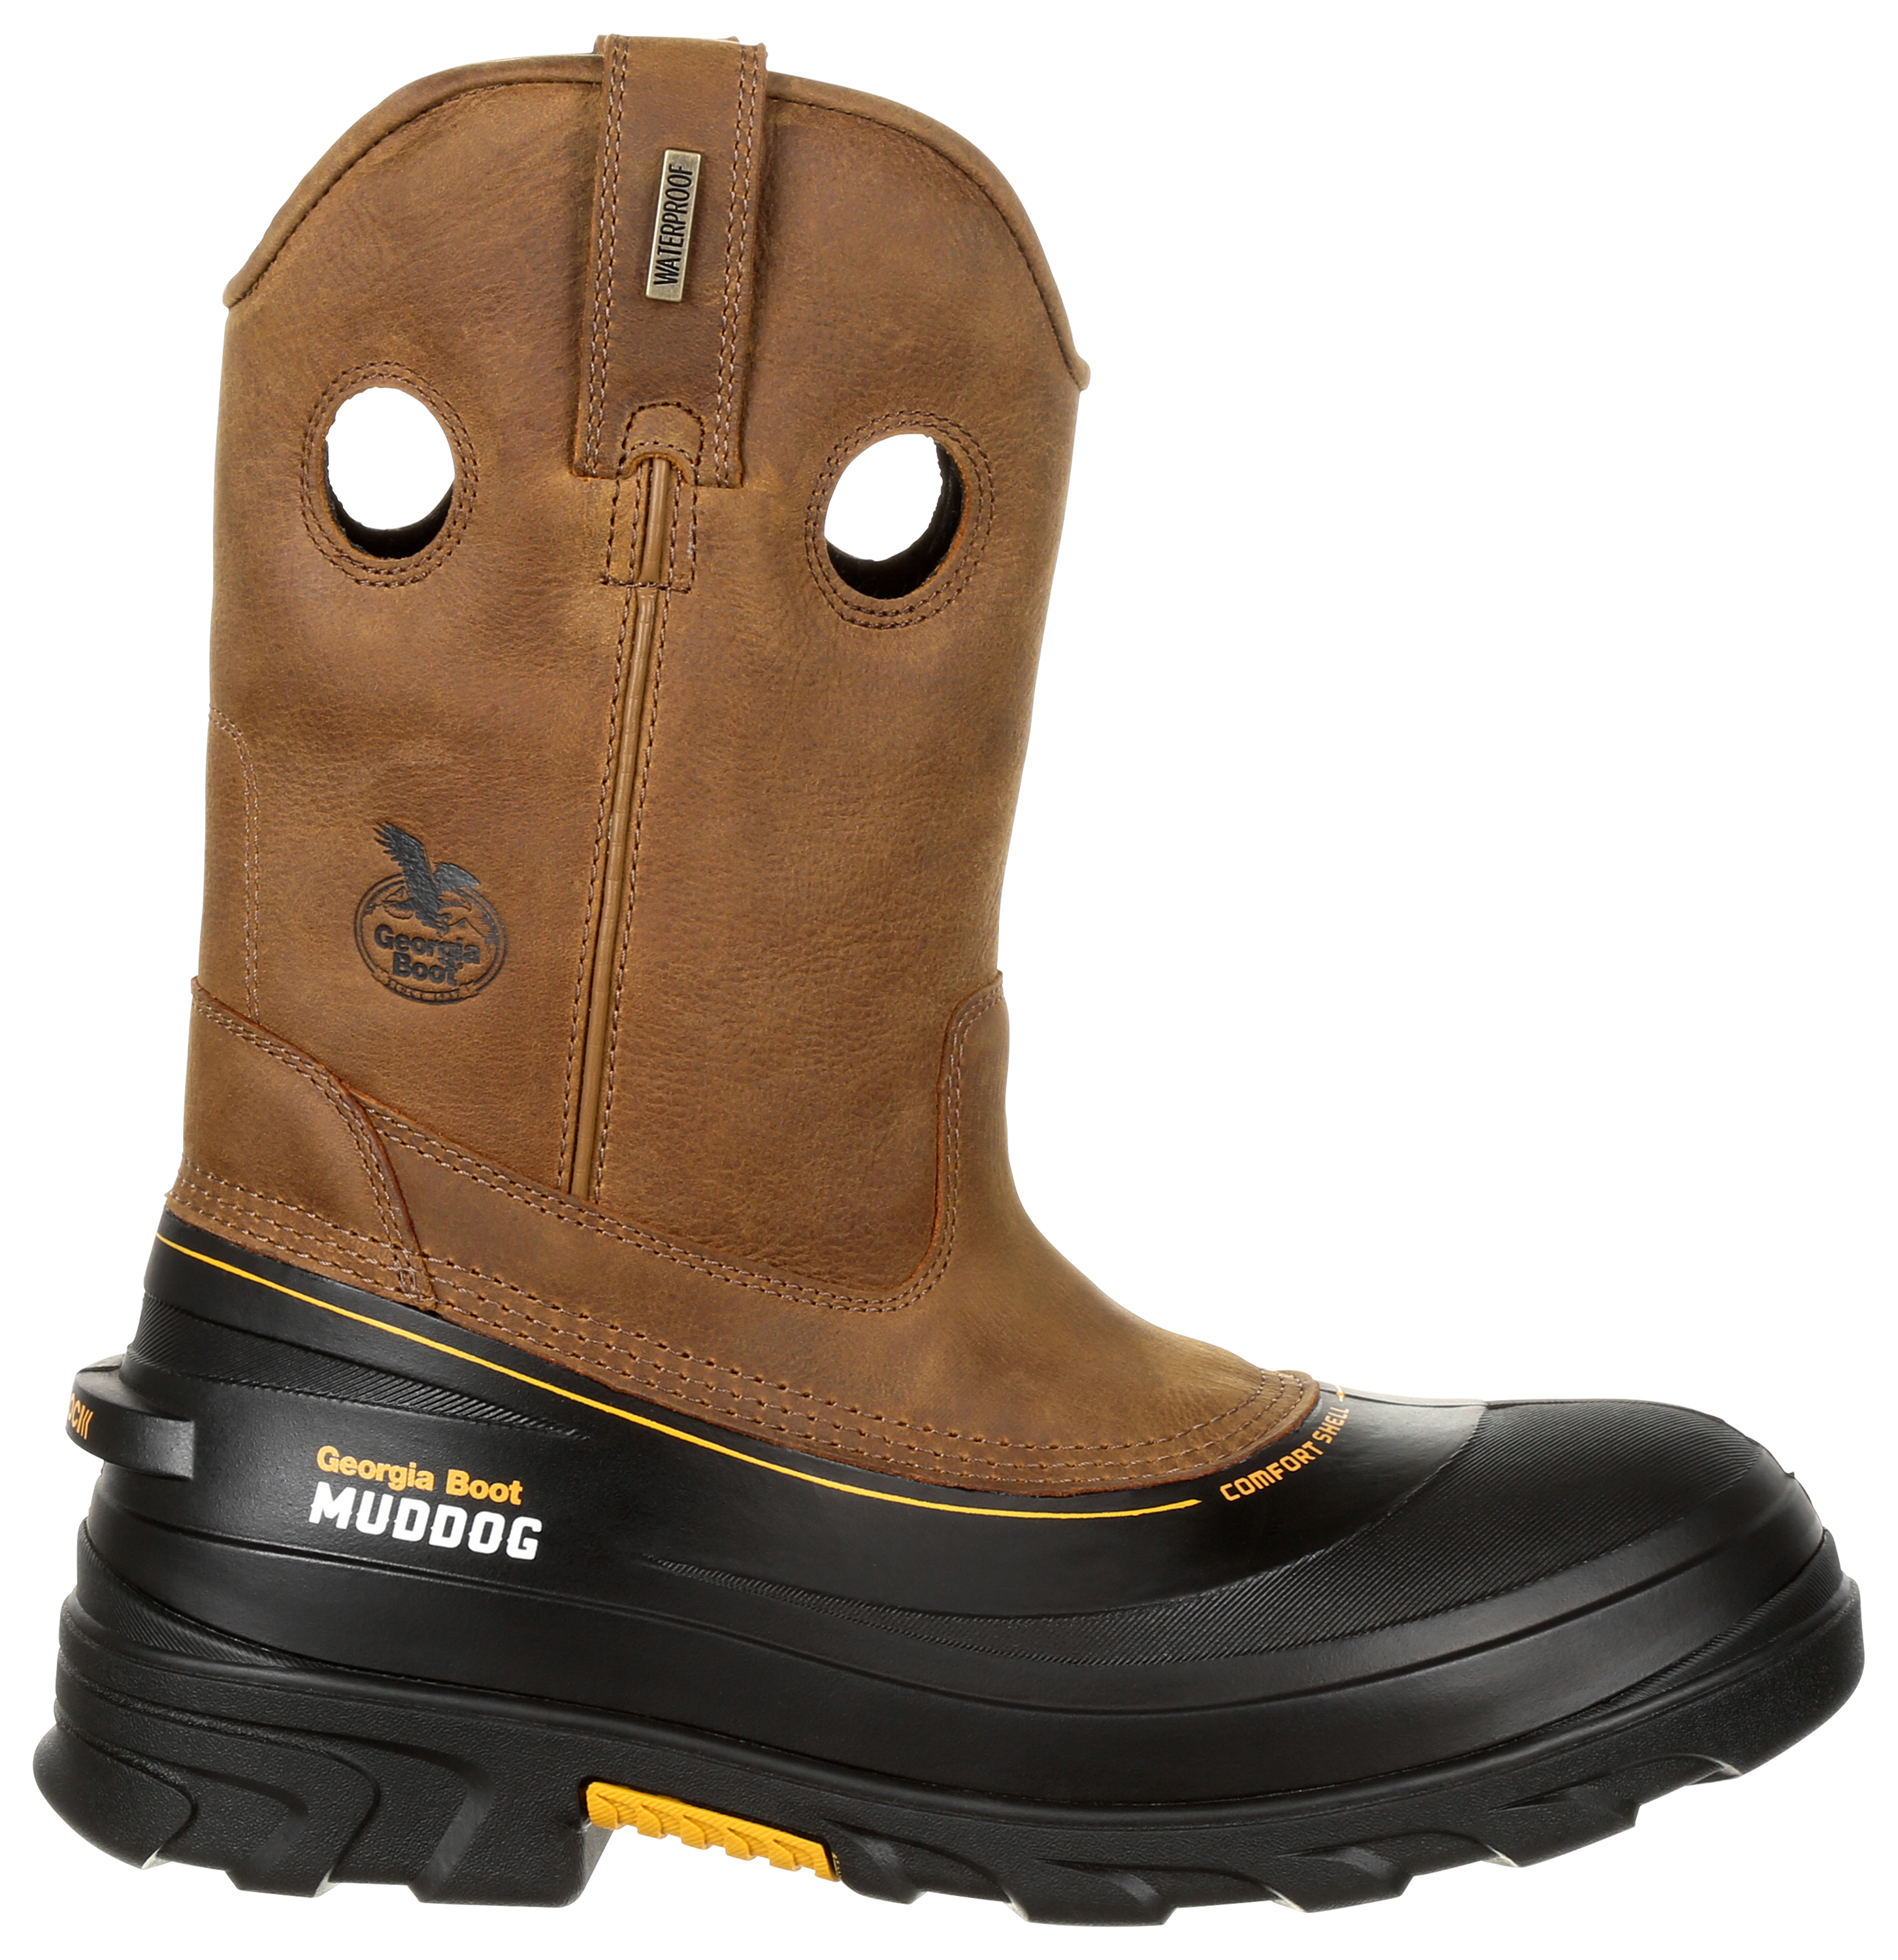 Georgia Boot Muddog Waterproof Composite Toe Wellington Work Boots for Men